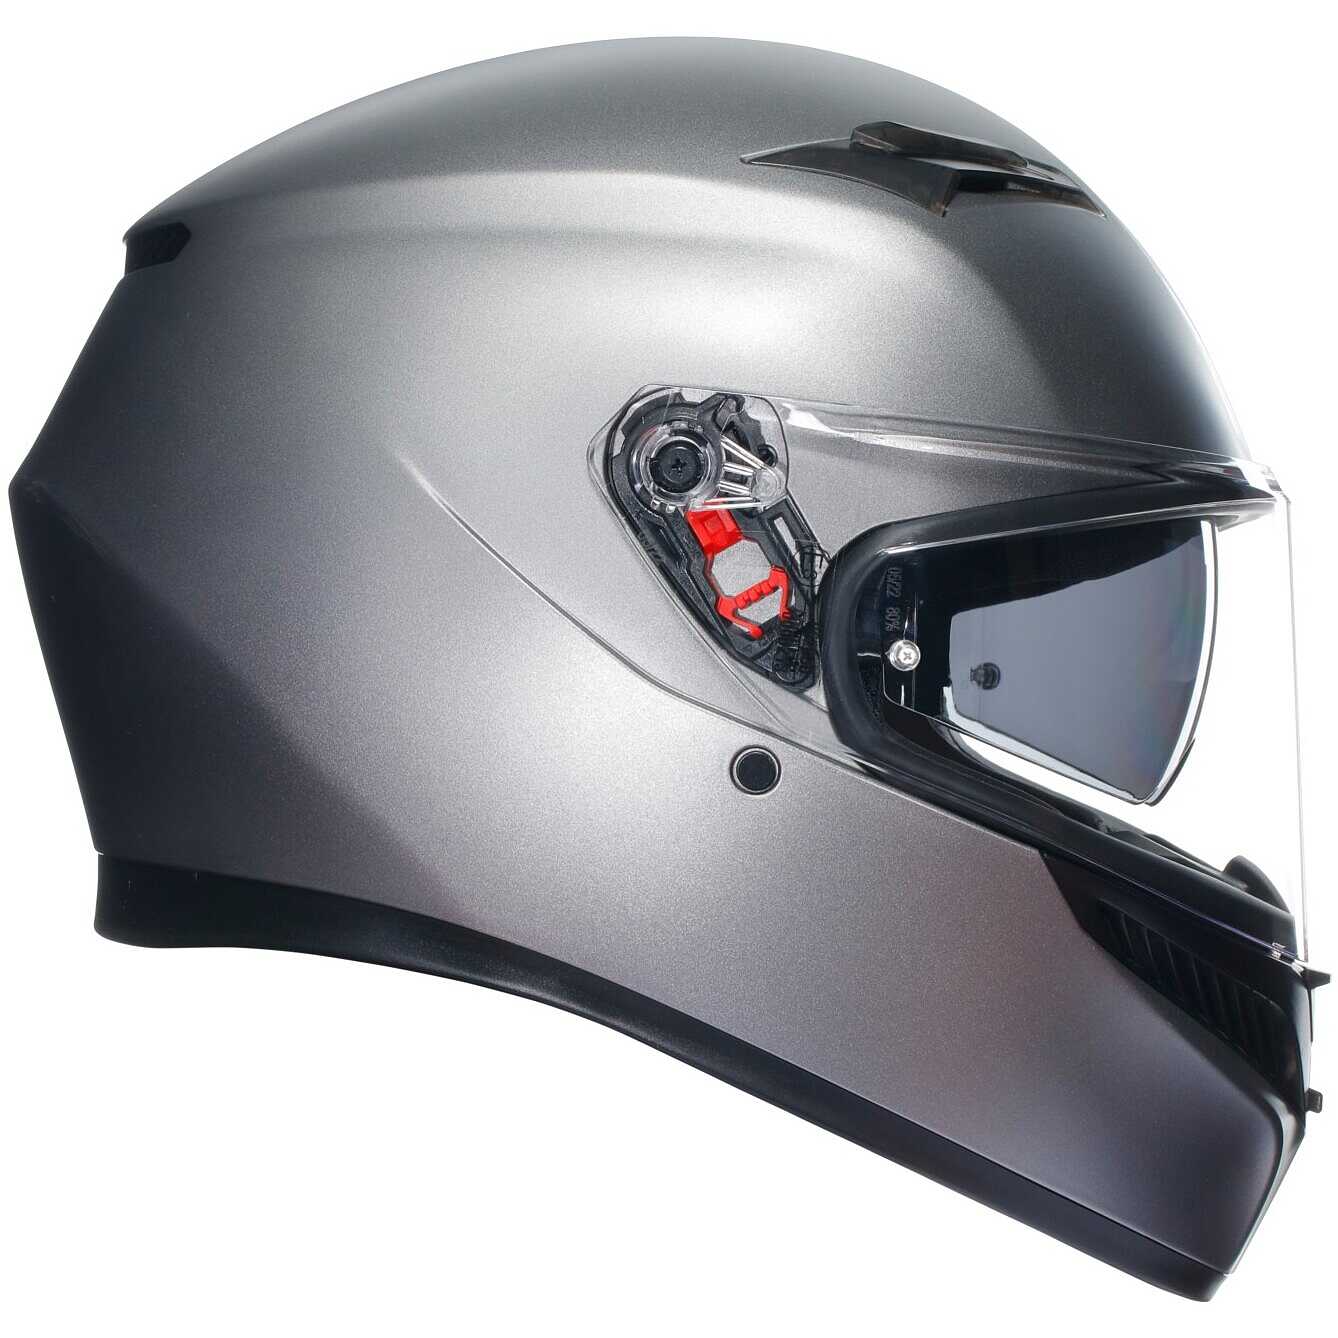 Integral Motorcycle Helmet Agv K3 RODIO Matt Gray For Sale Online 